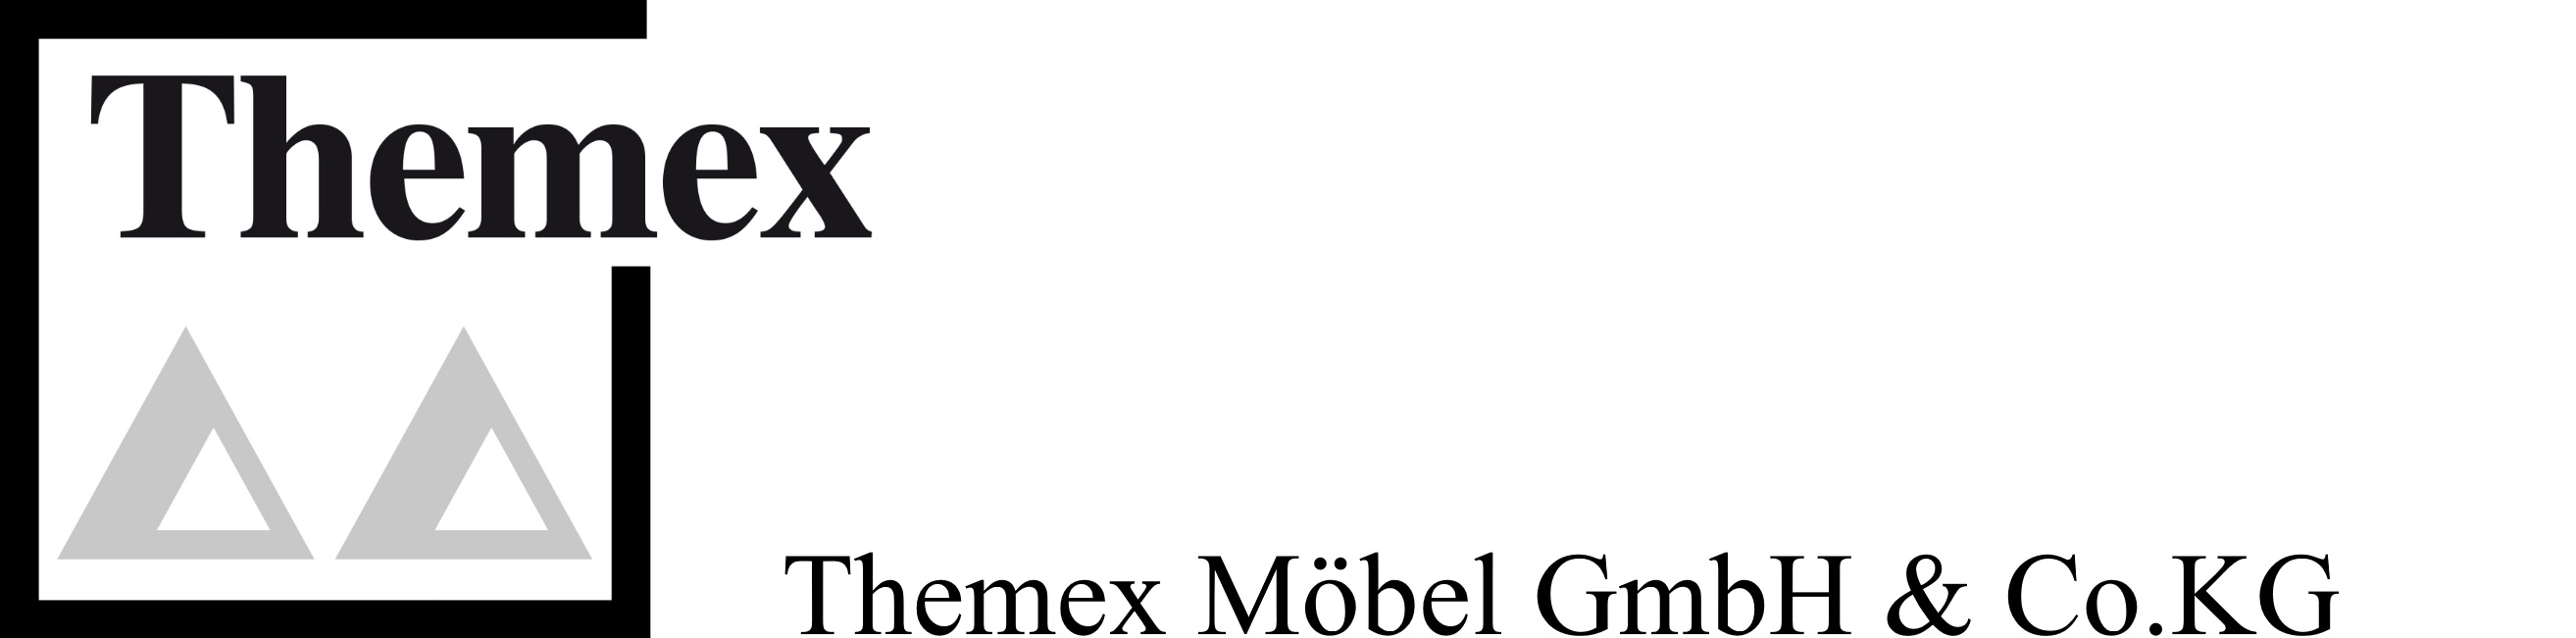 Themex Möbel GmbH & Co.KG